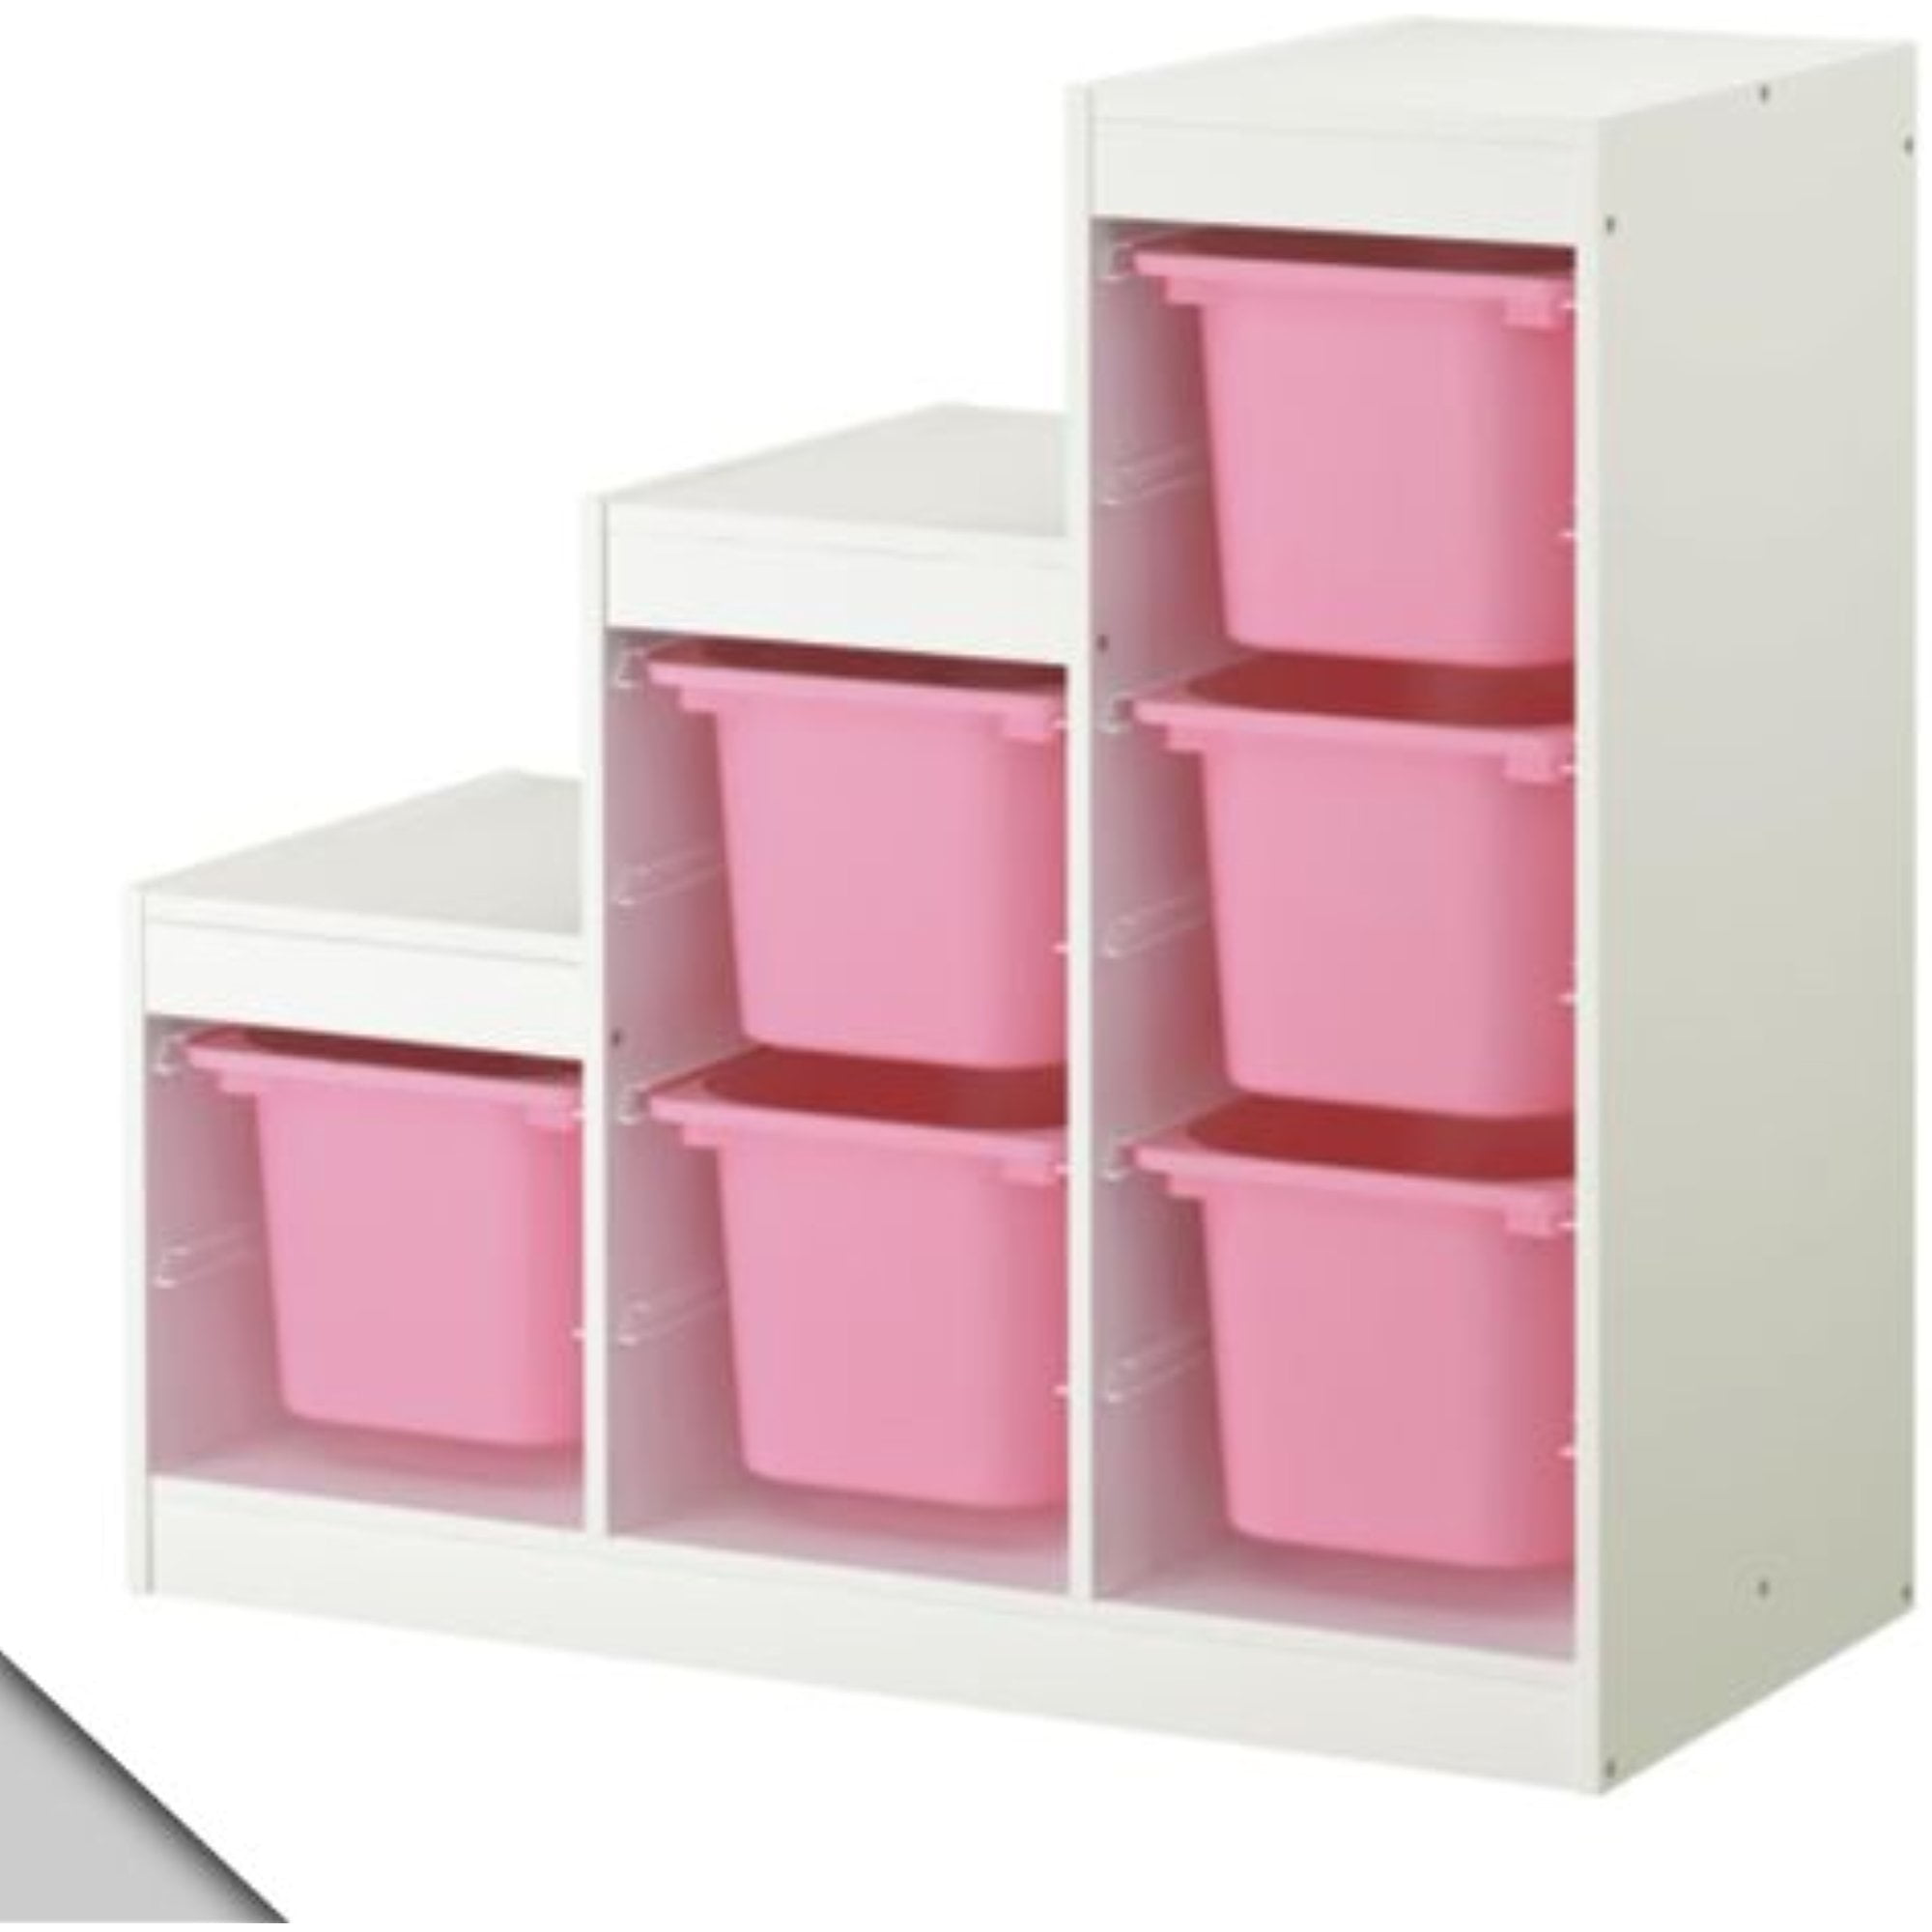 IKEA Trofast Toy Storage Unit - White for sale online